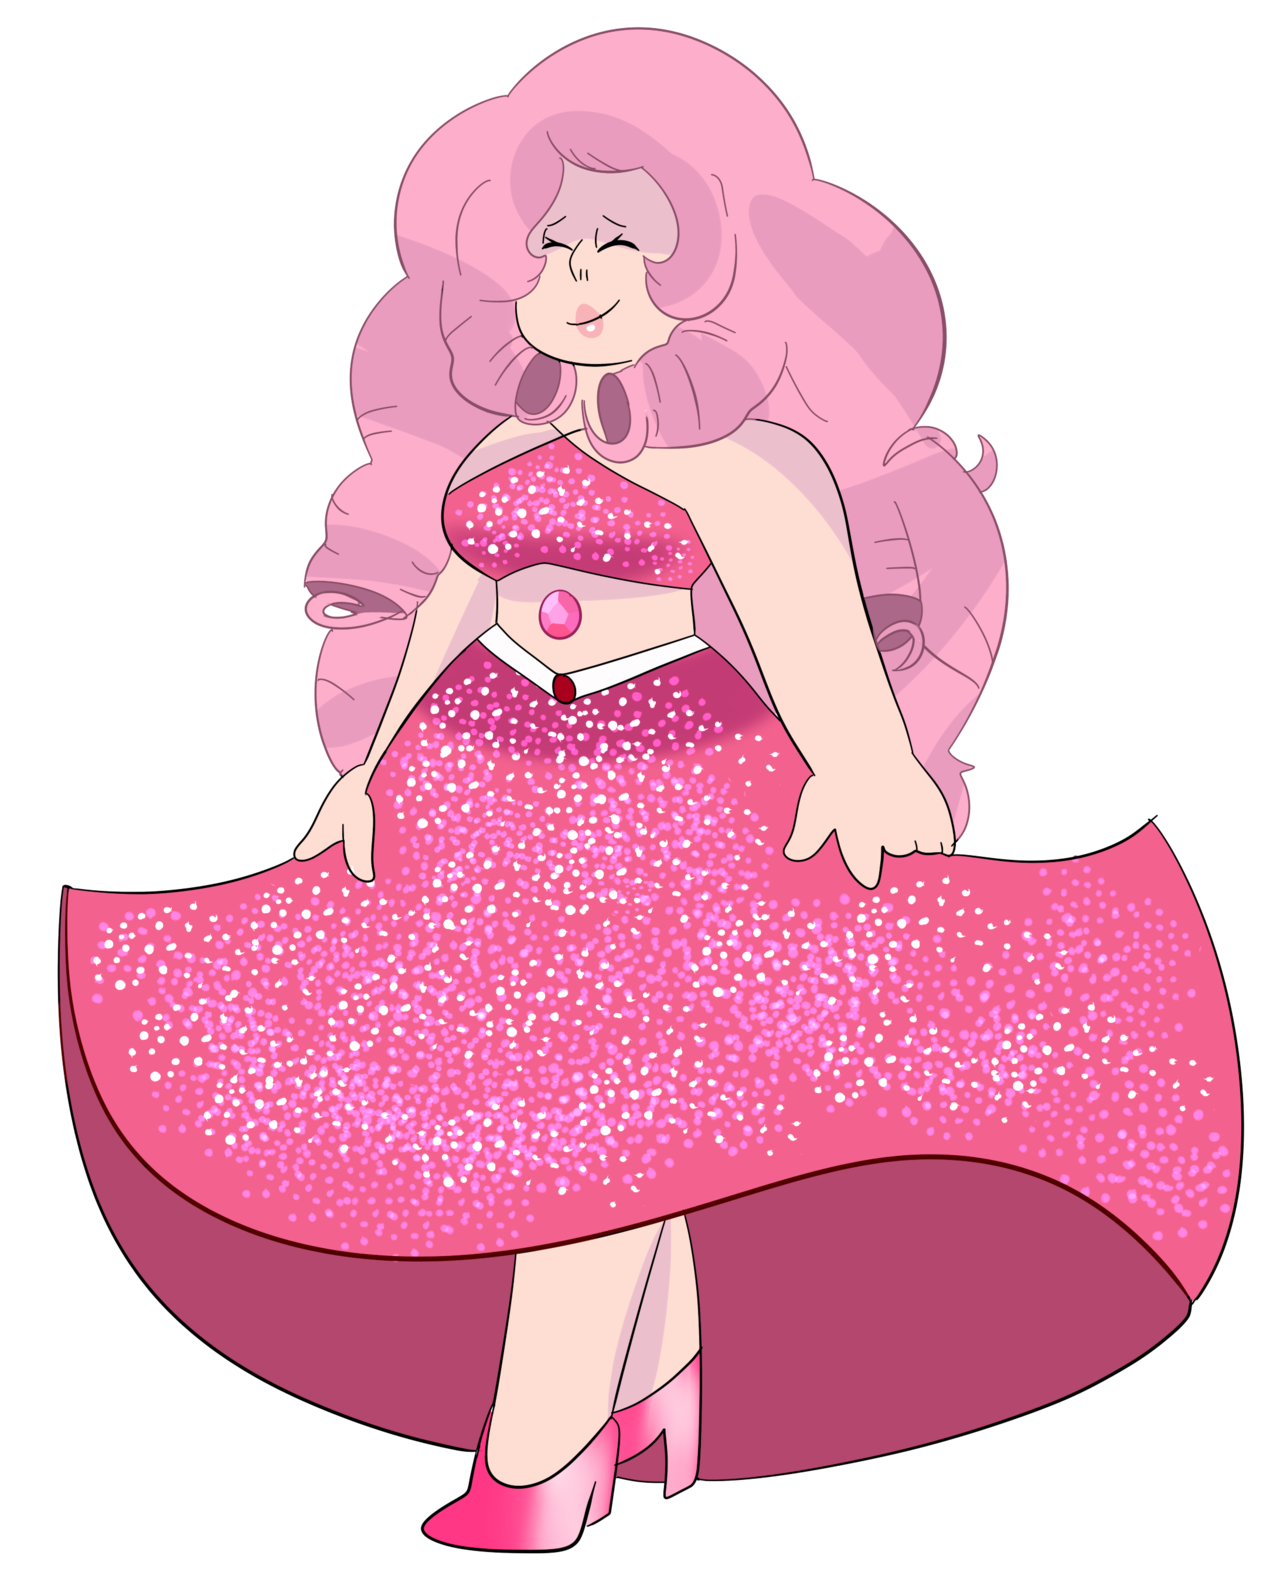 Rose in a sparkling dress